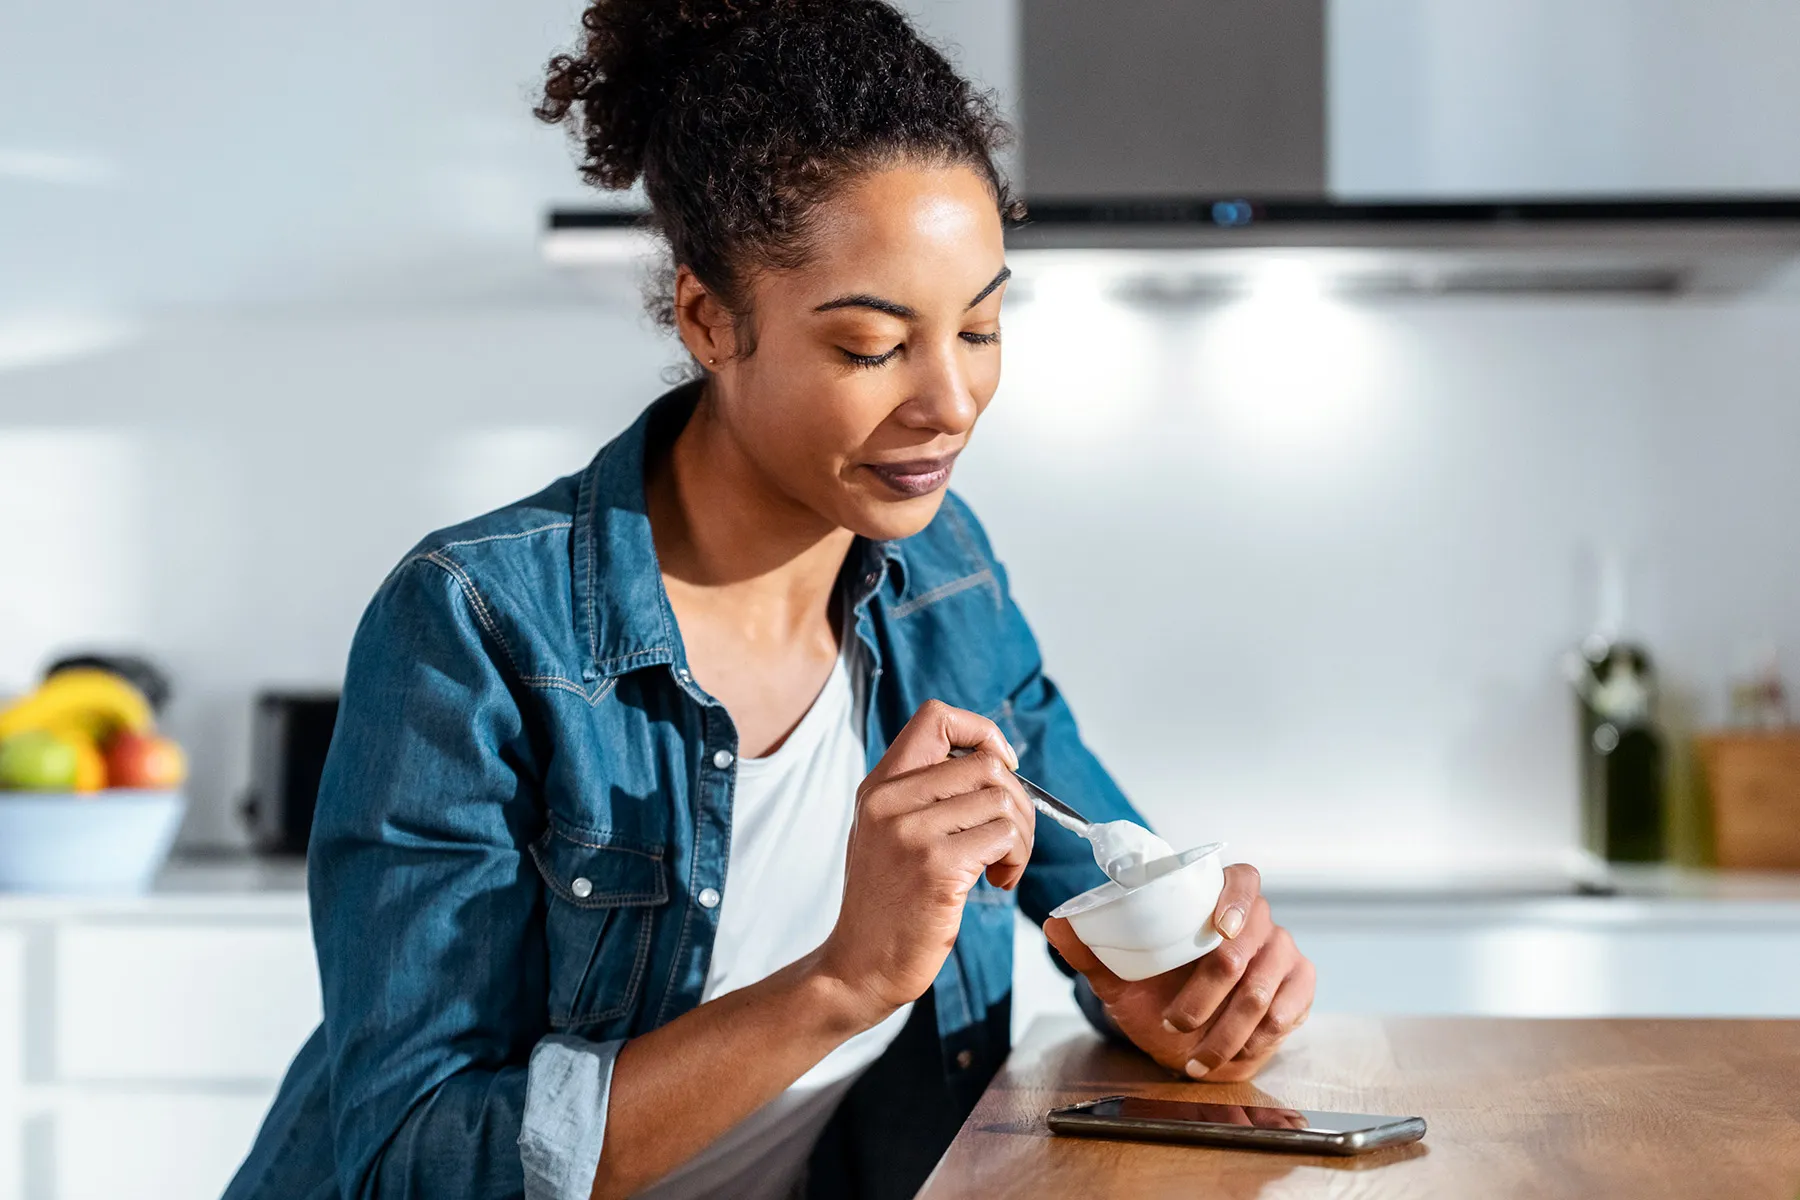 Eating Earlier Offers Health Benefits, Studies Say